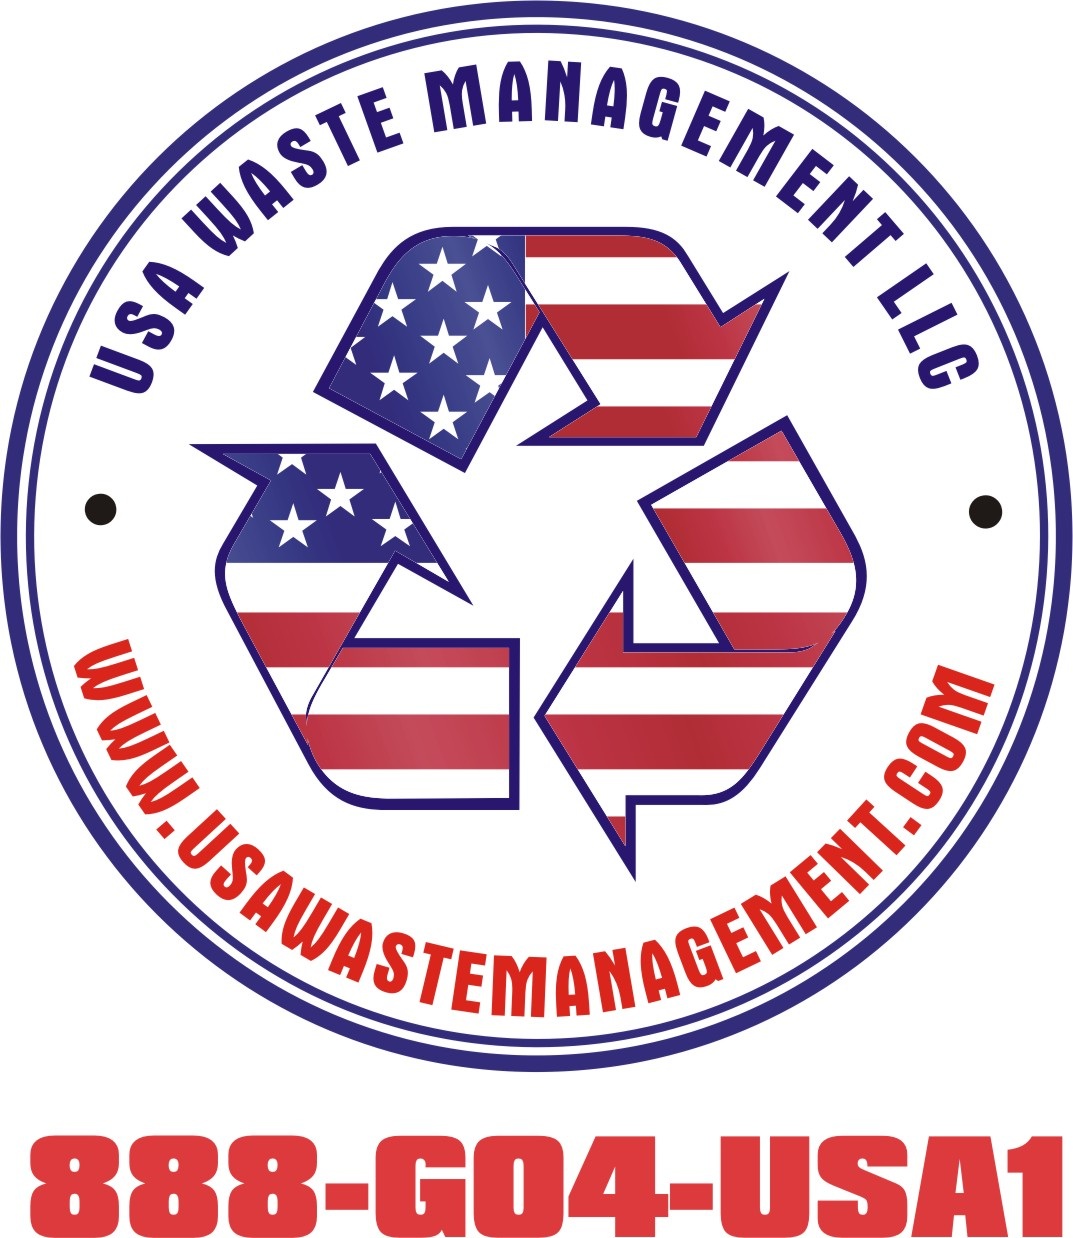 USA Waste Management